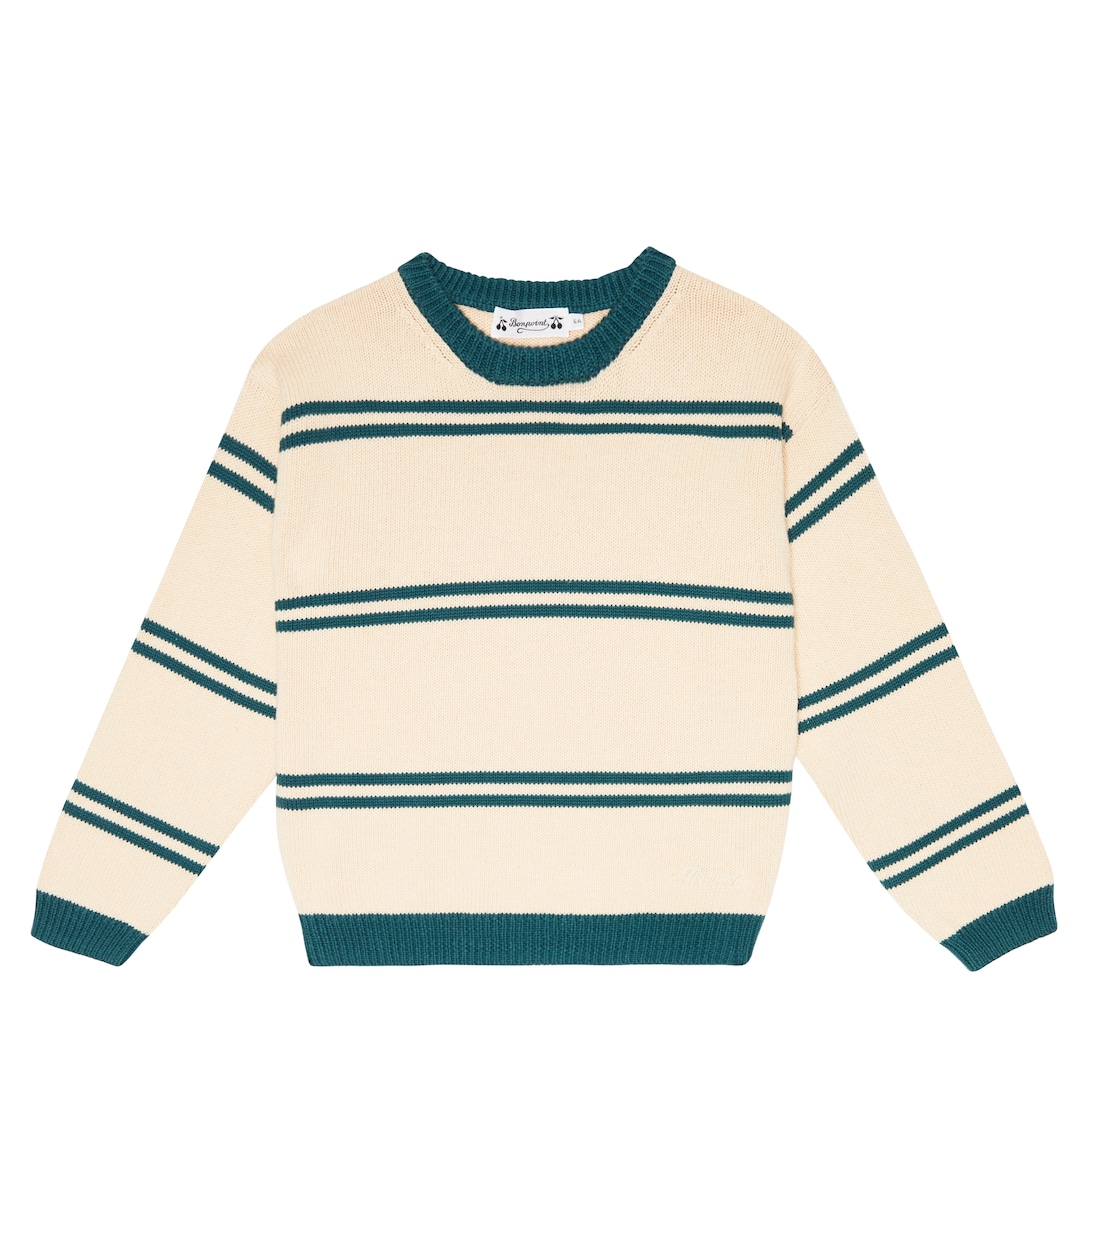 Хлопковый свитер анумати Bonpoint, зеленый детский off white свитер almire bonpoint